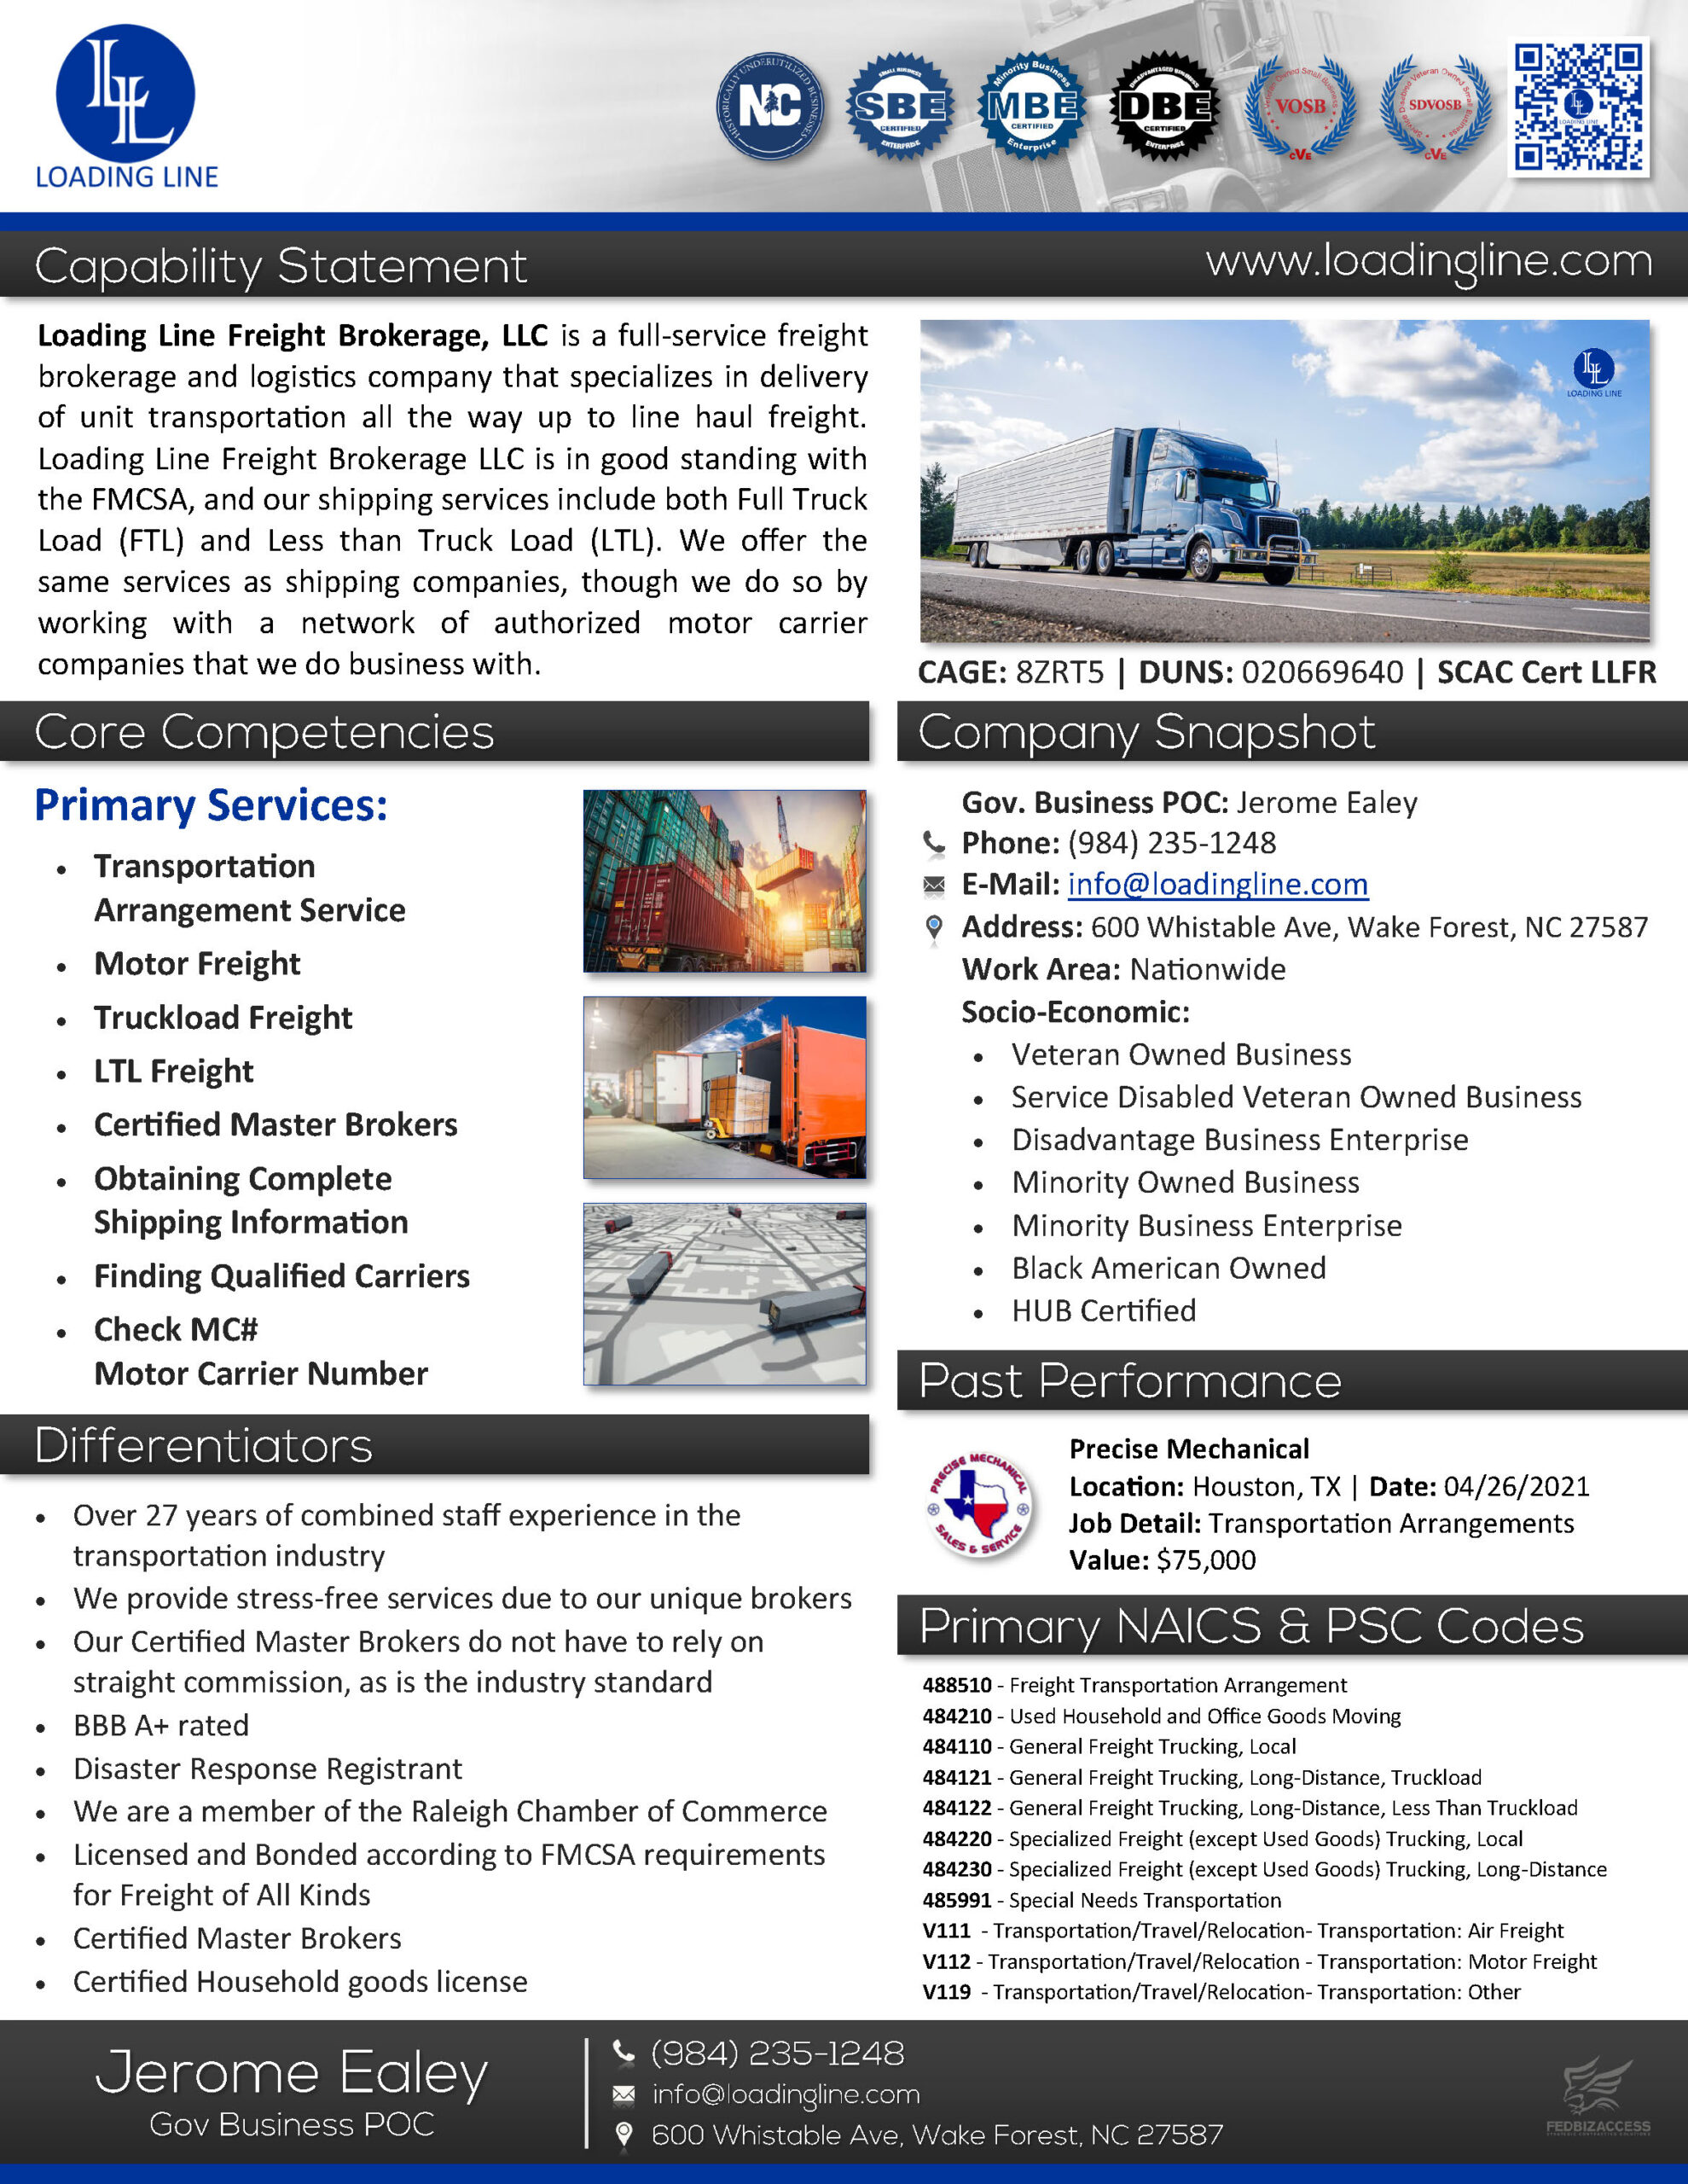 Loading Line Freight Brokerage, LLC Capability Statement